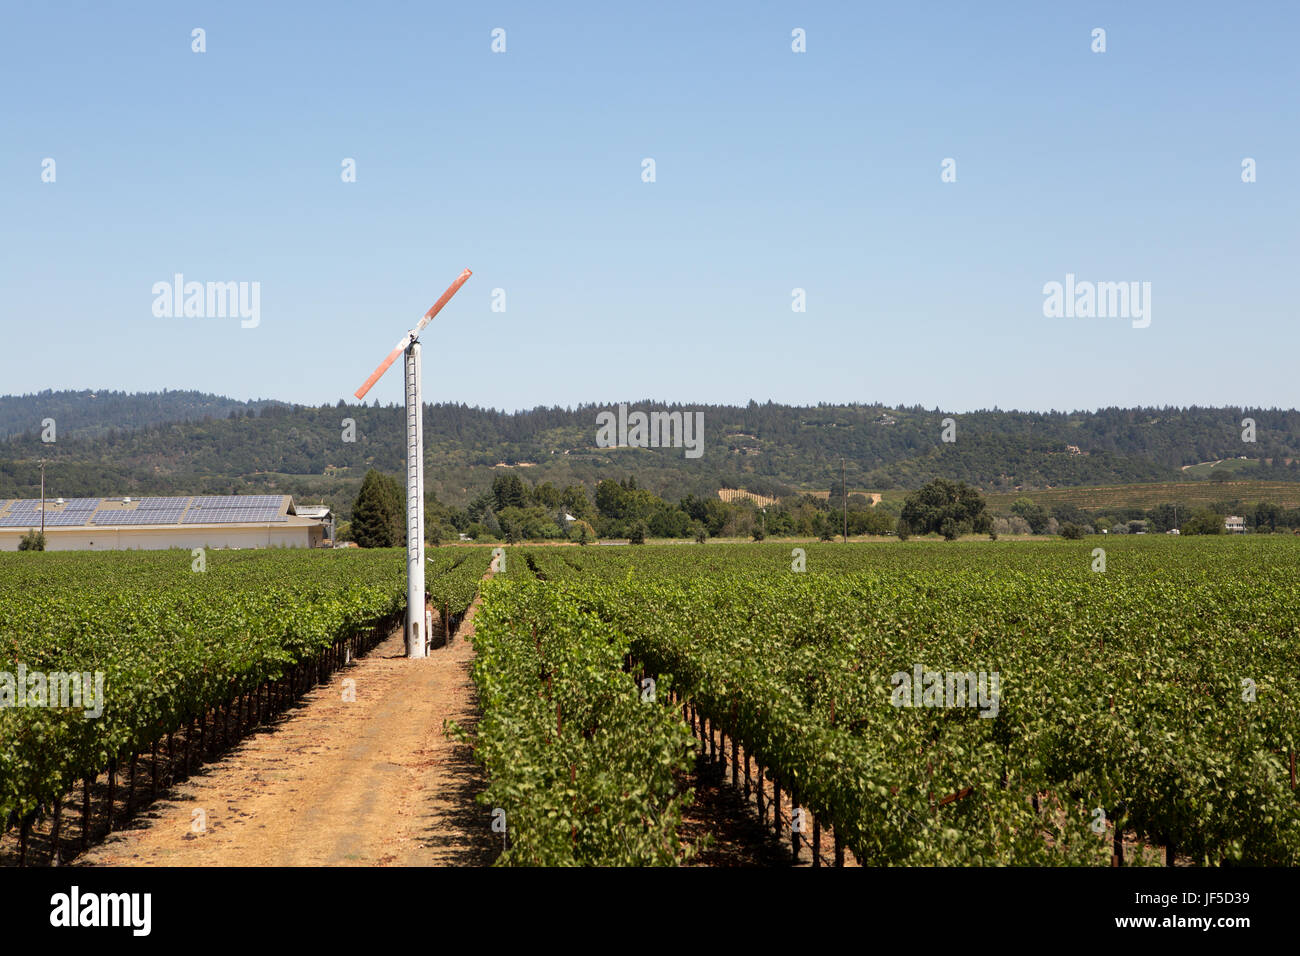 Una torre eolica sorge nei pressi di una cantina di vini tra i filari di vigneti in Napa Valley. Foto Stock